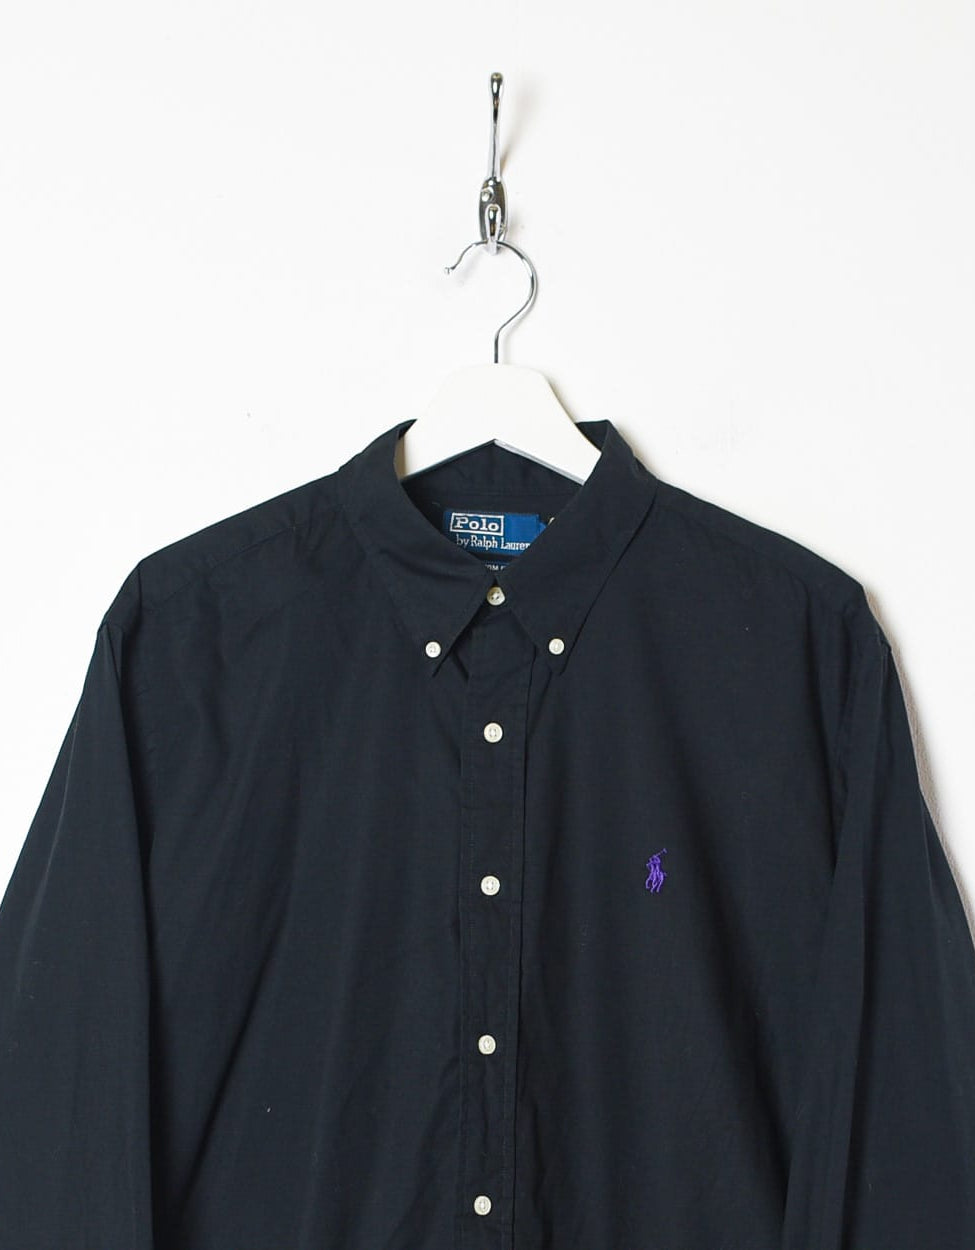 Black Ralph Lauren Shirt - X-Large